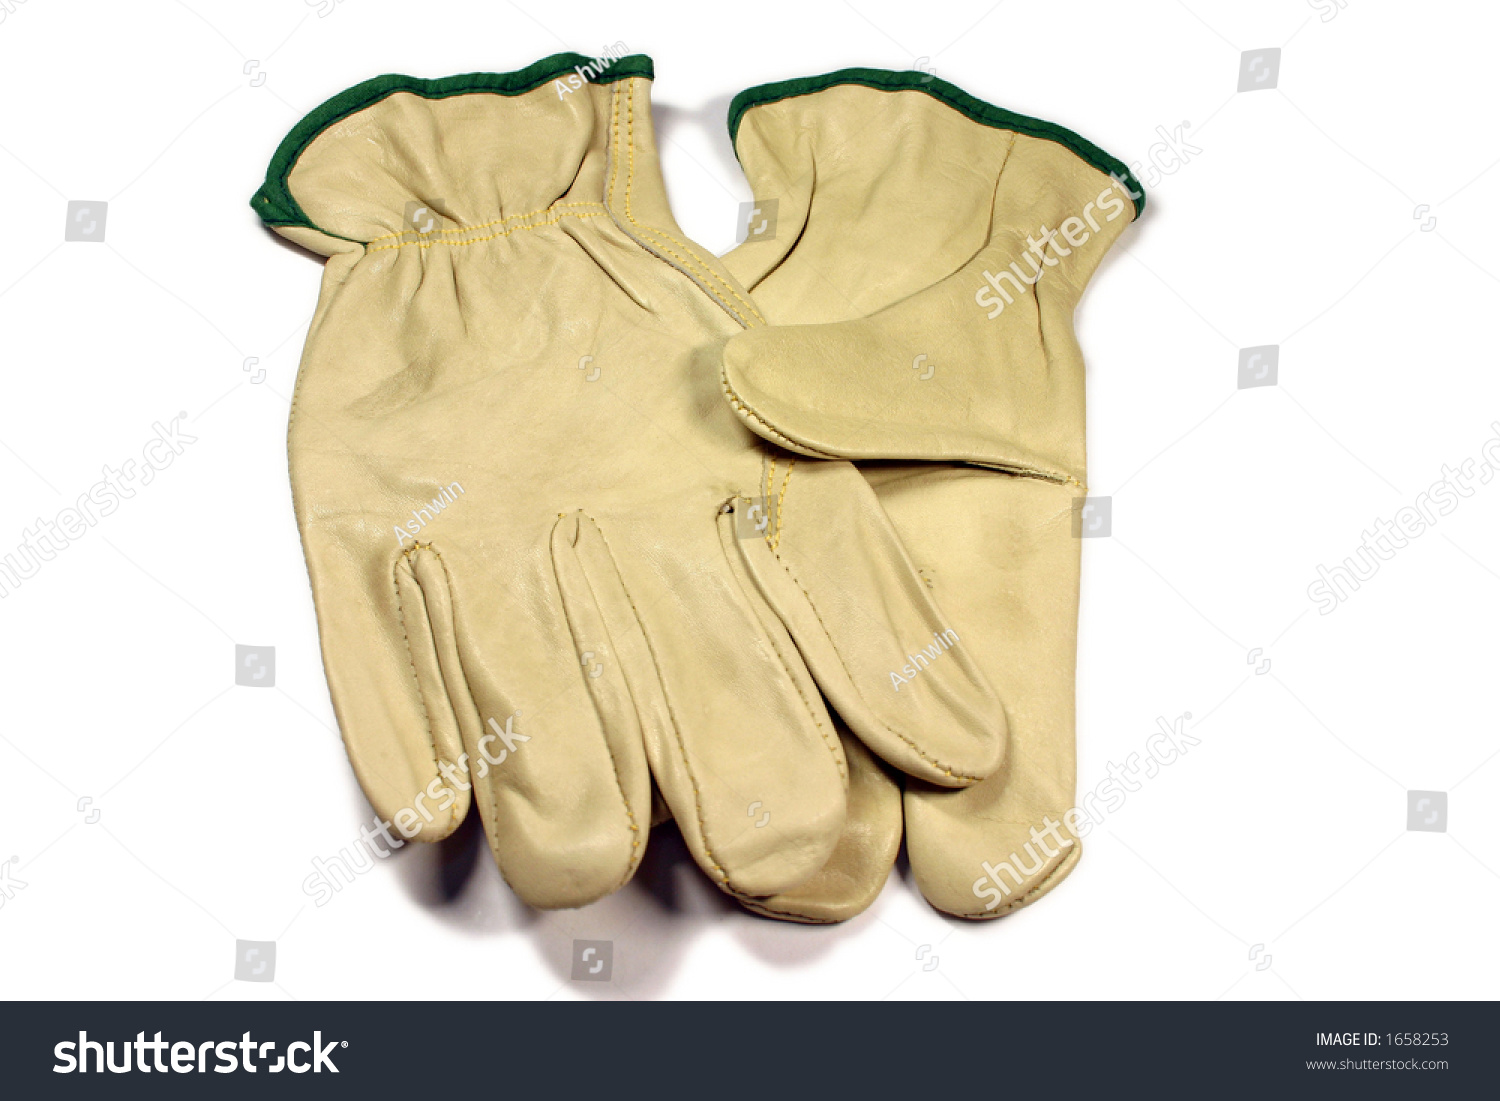 Safety Gloves, Multipurpose Leather Gloves Stock Photo 1658253 ...